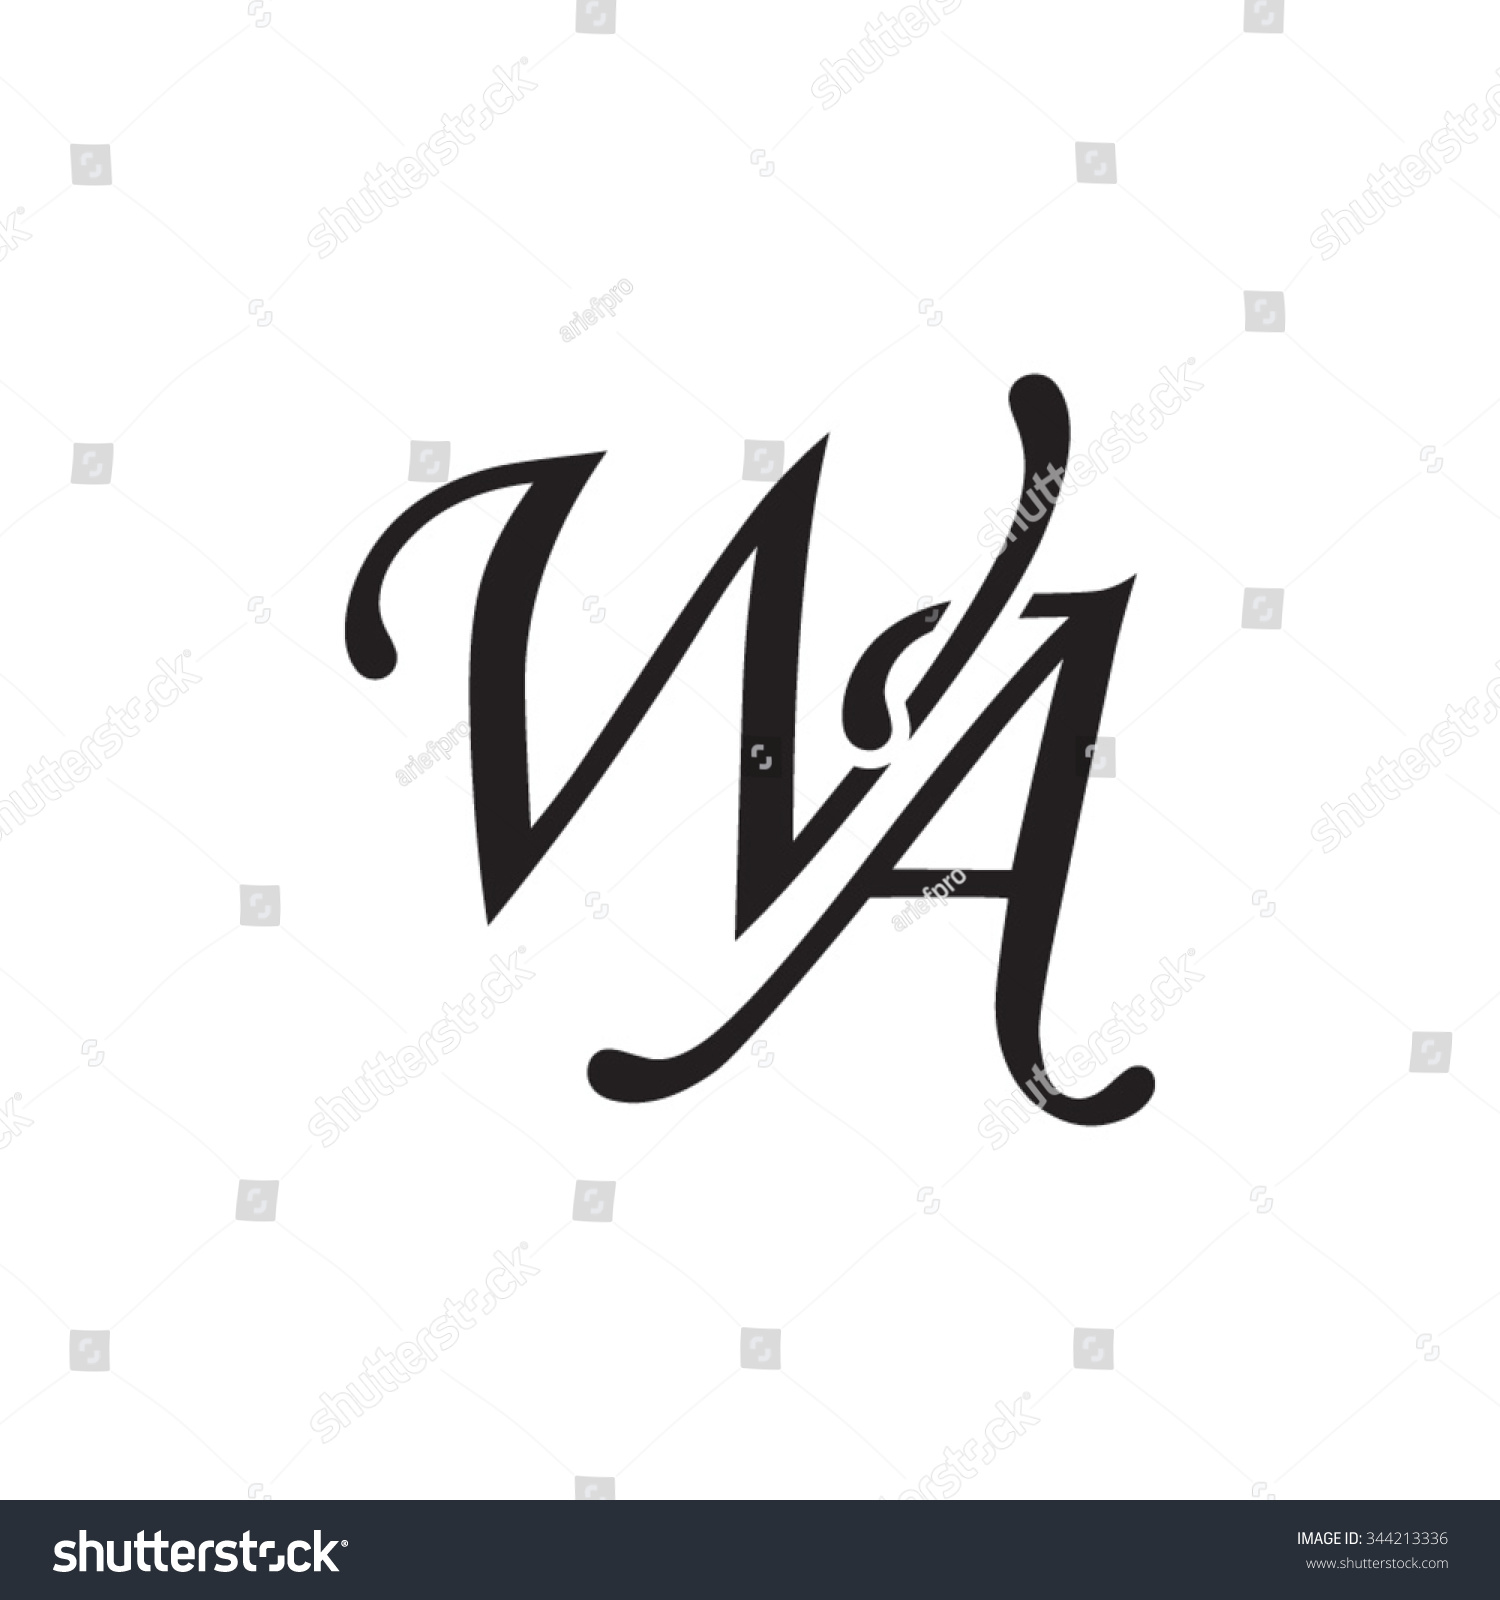 Wa Initial Monogram Logo Stock Vector Illustration 344213336 : Shutterstock